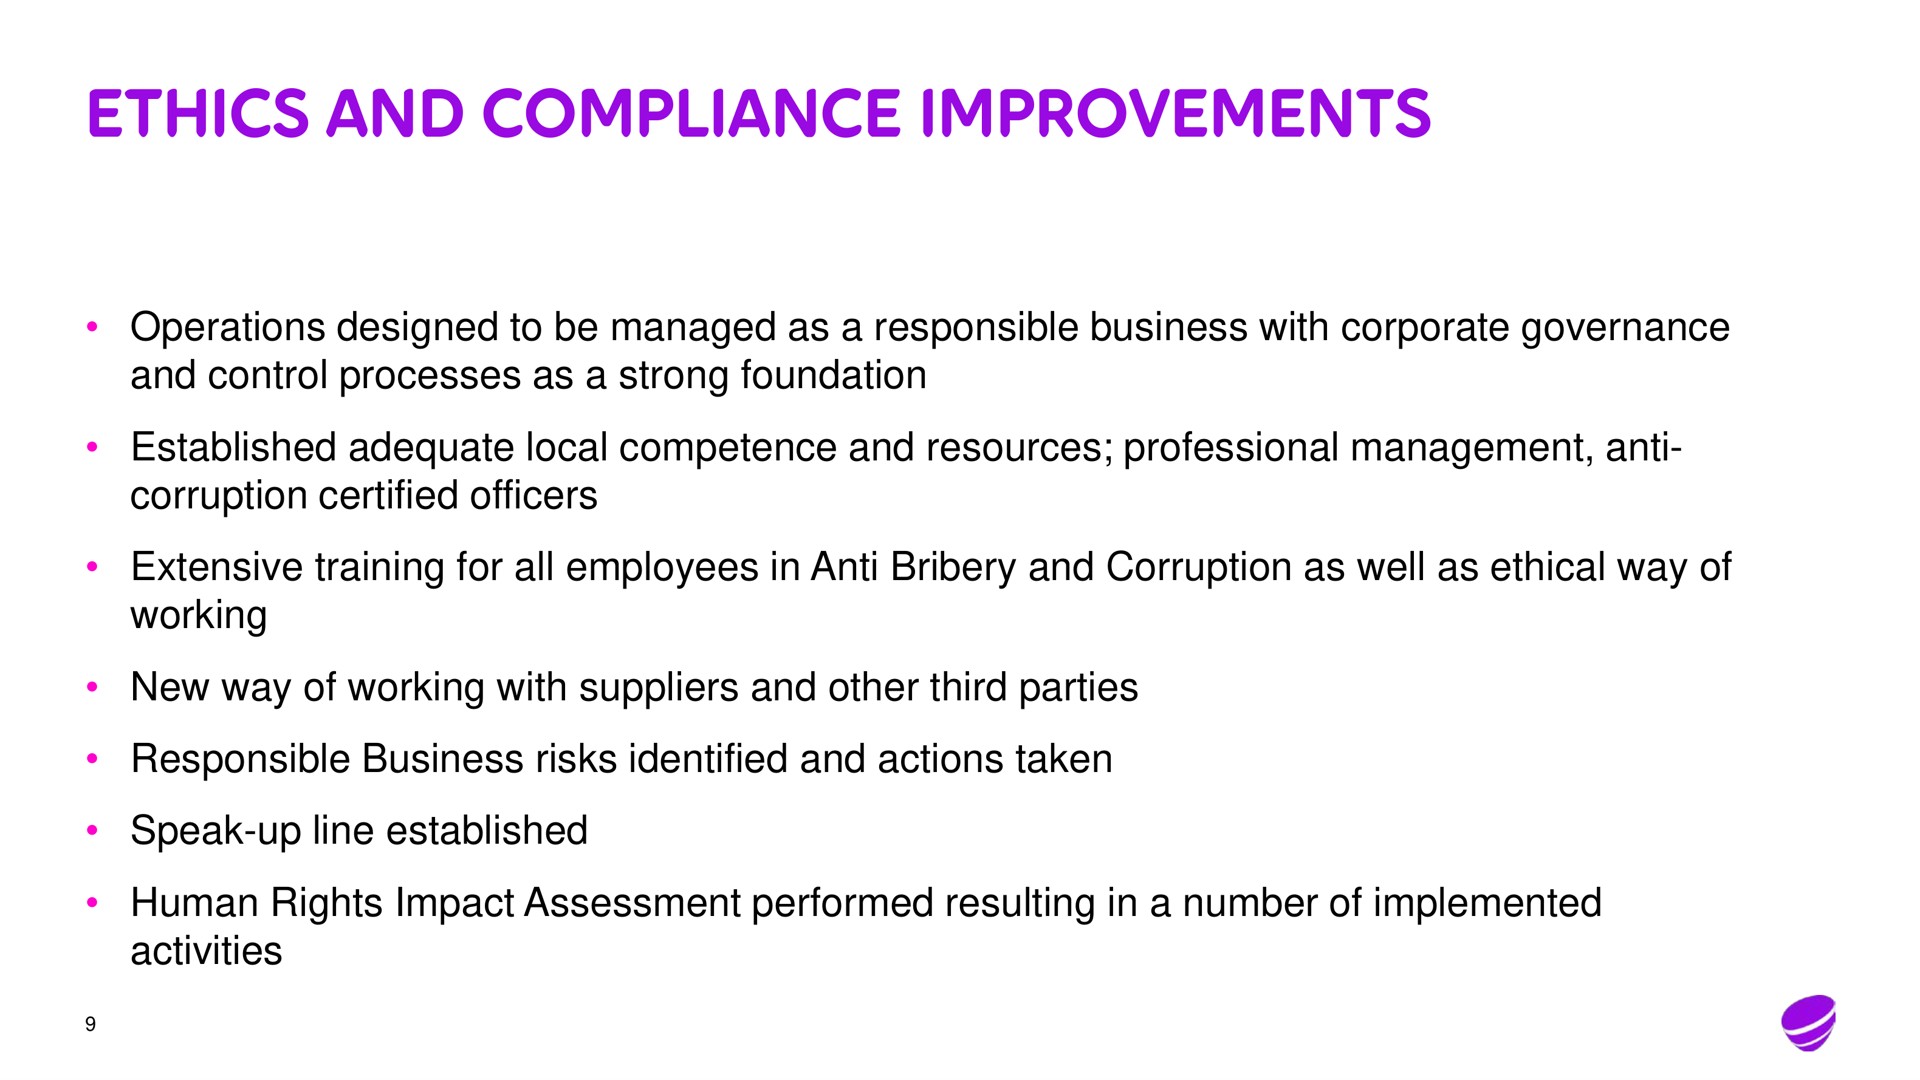 ethics and compliance improvements | Telia Company